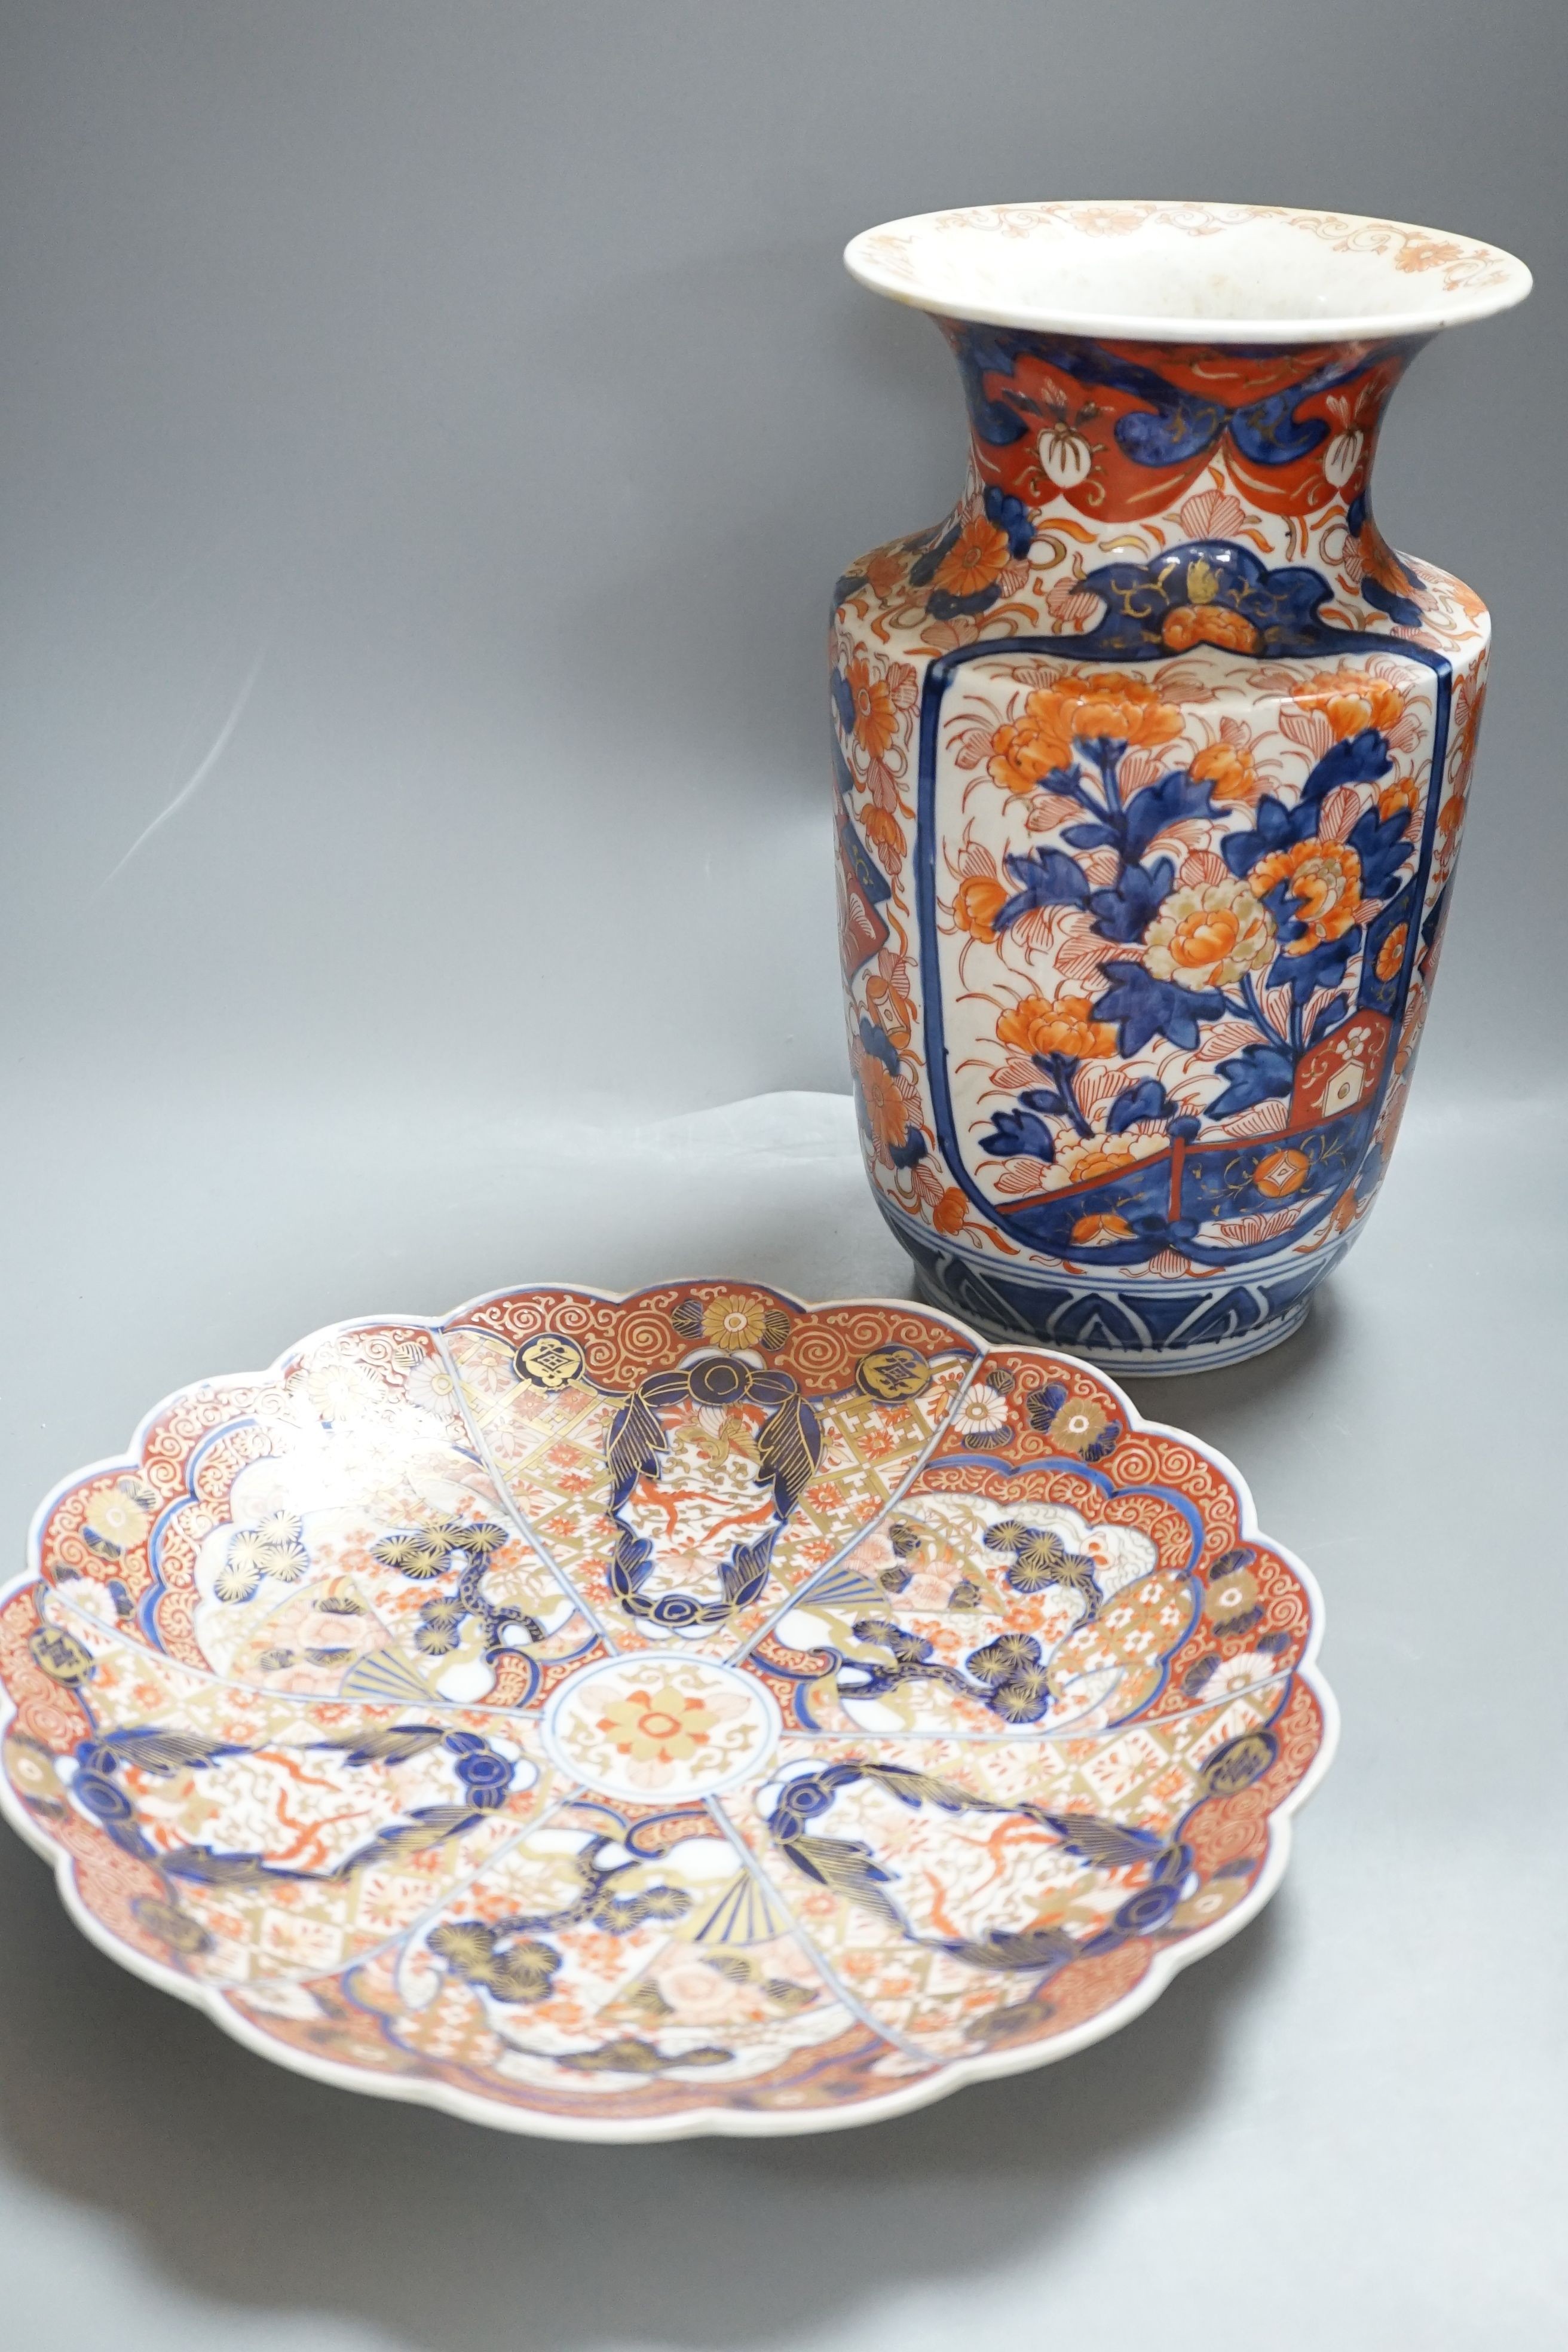 A Japanese Imari vase, 31cm tall, and an Imari dish